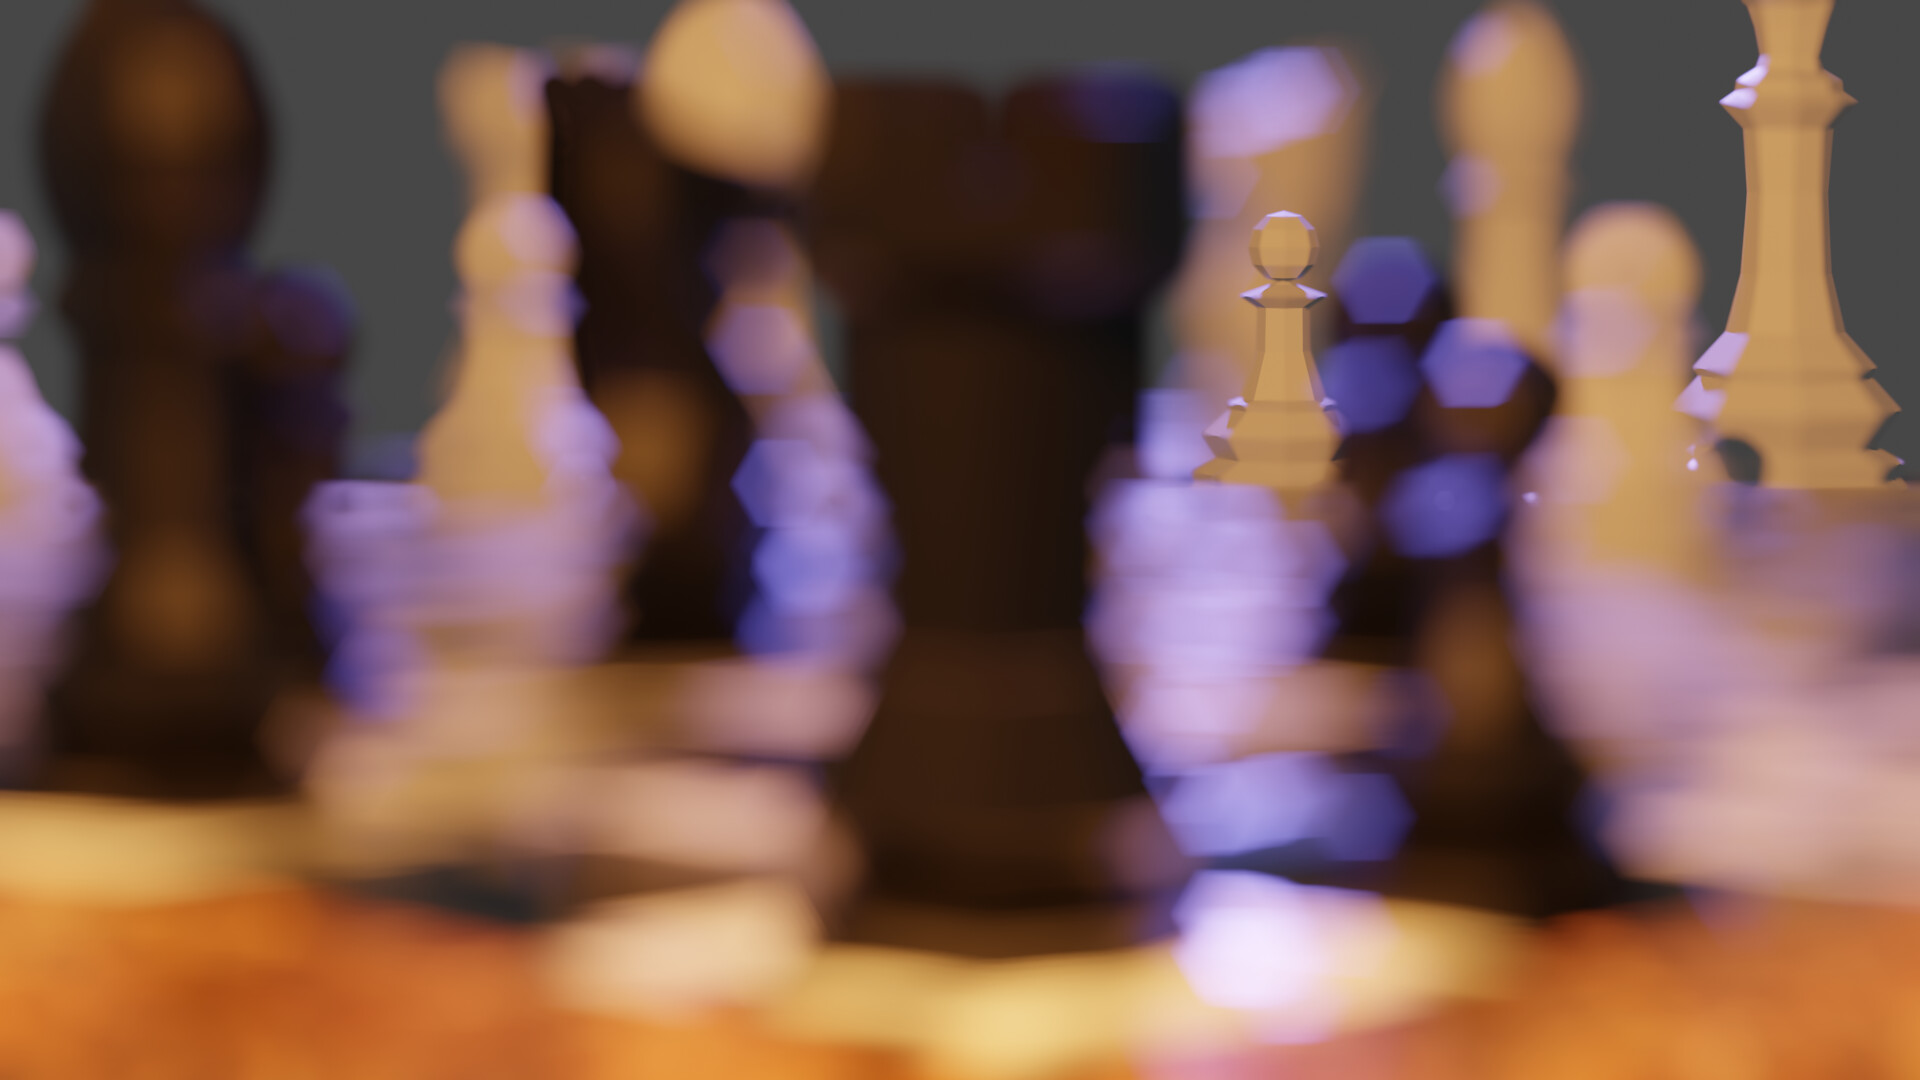 Elegant Chess Board - 3D rendered Live Wallpaper - free download